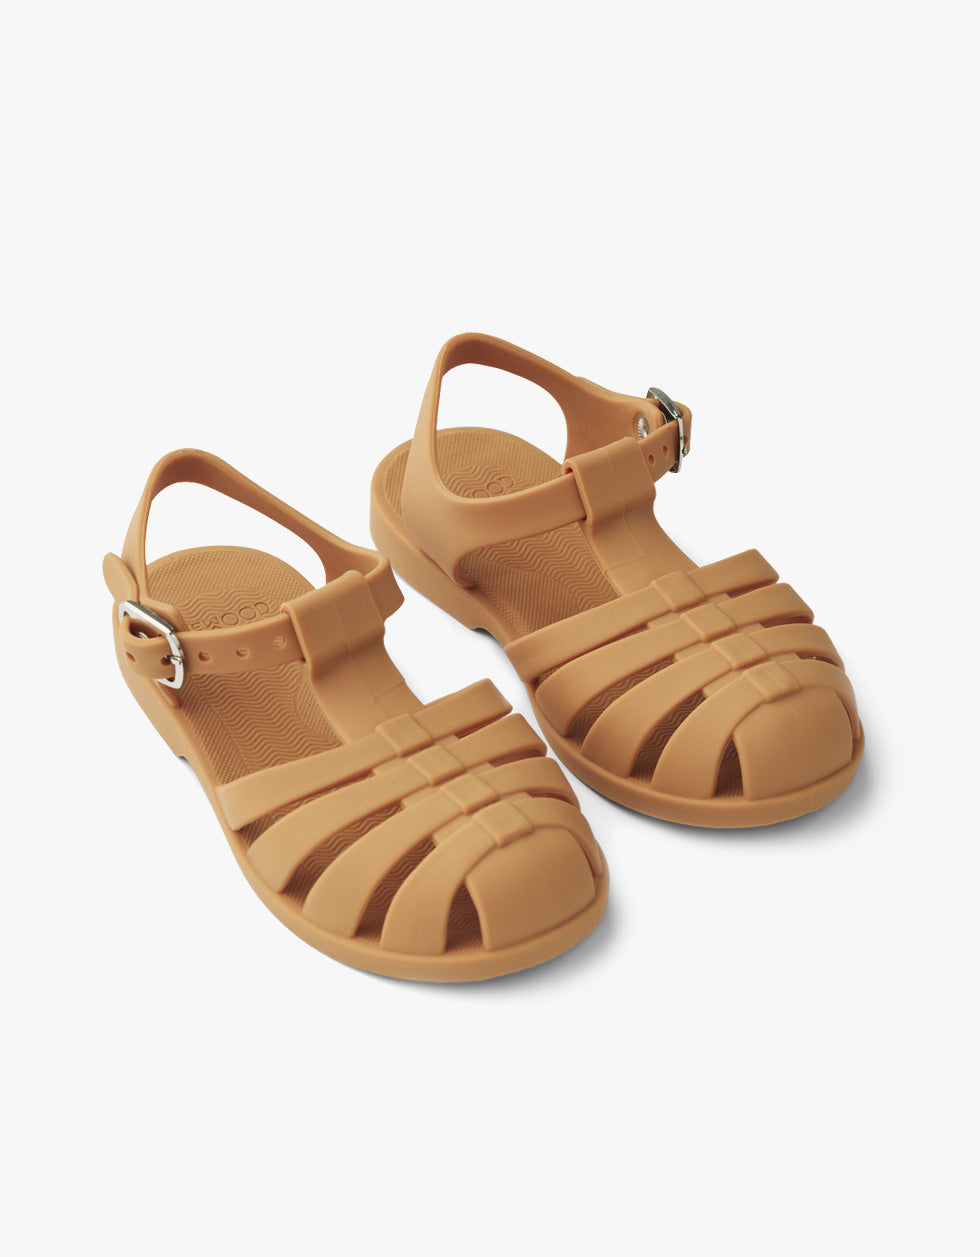 Bre Beach Sandals - Almond